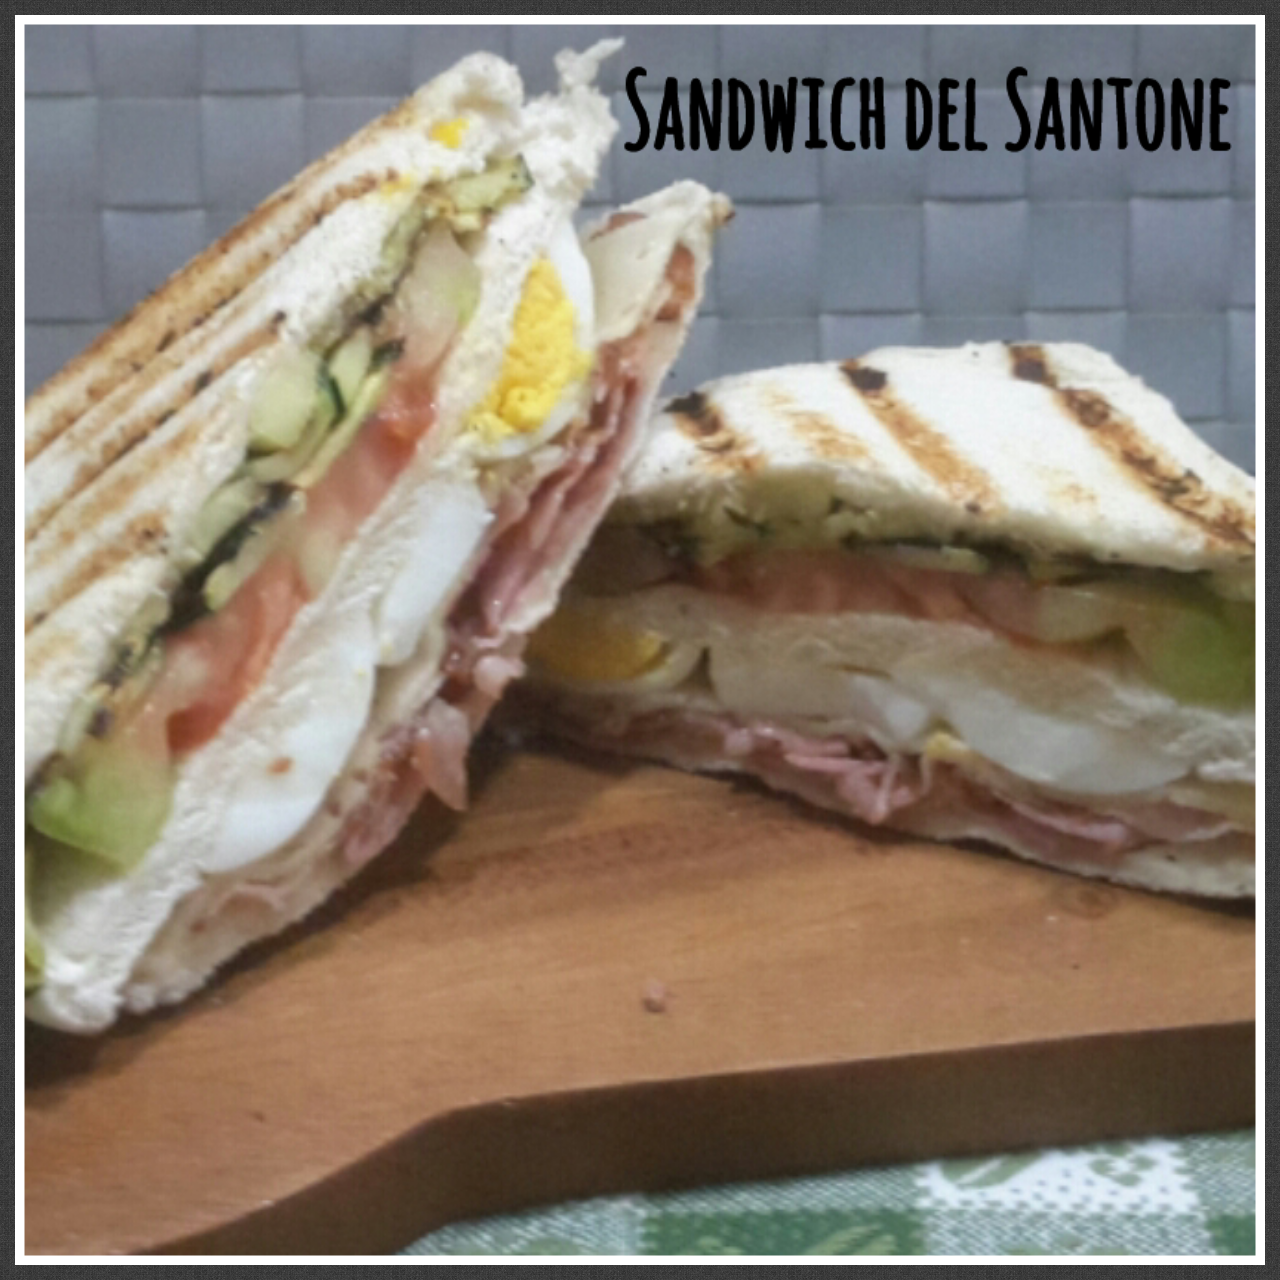 Sandwich del Santone